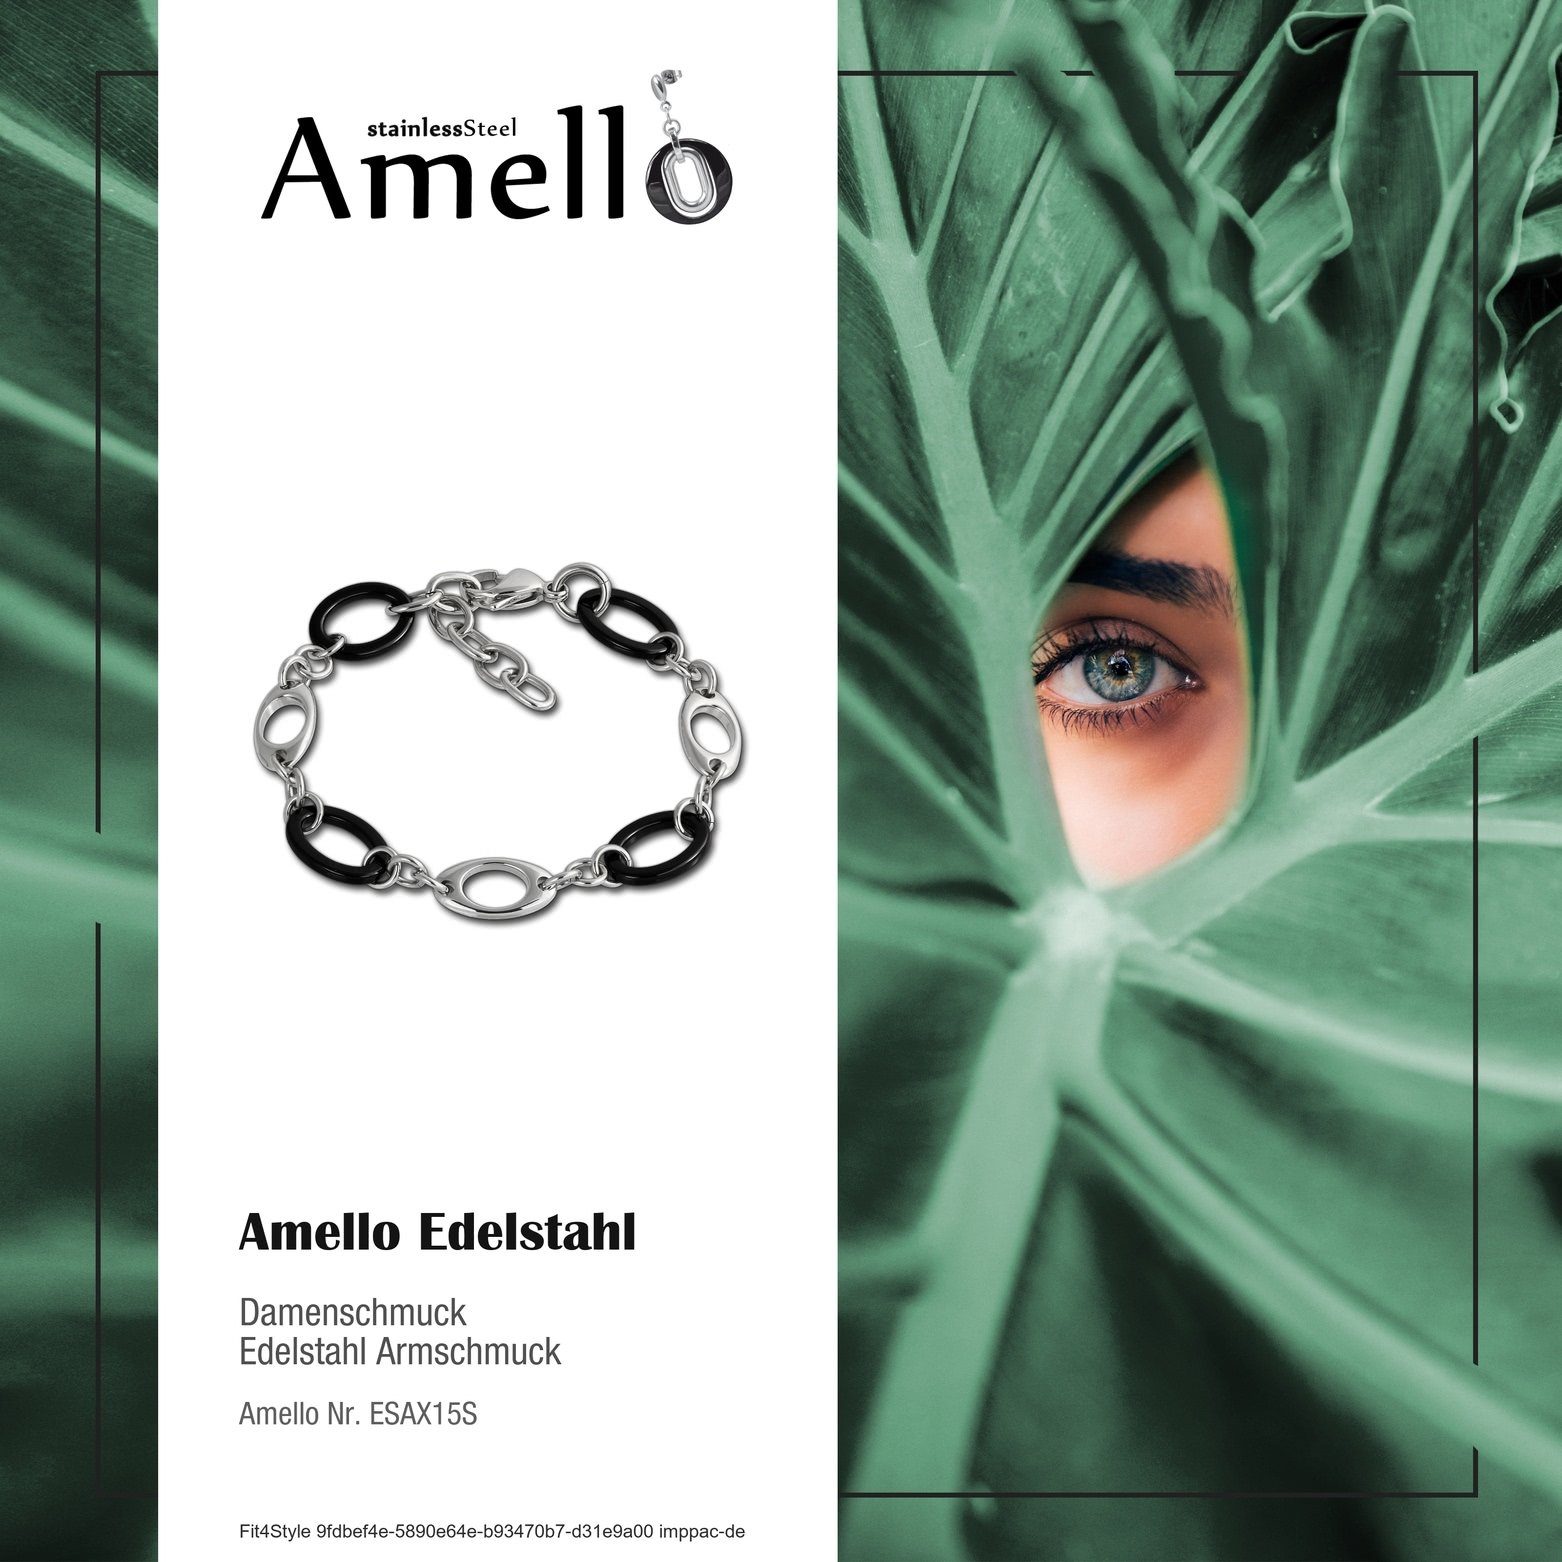 Amello Edelstahlarmband Edelstahl für Armband Damen Kegel Armbänder silber schwarz Steel) (Armband), (Stainless Amello